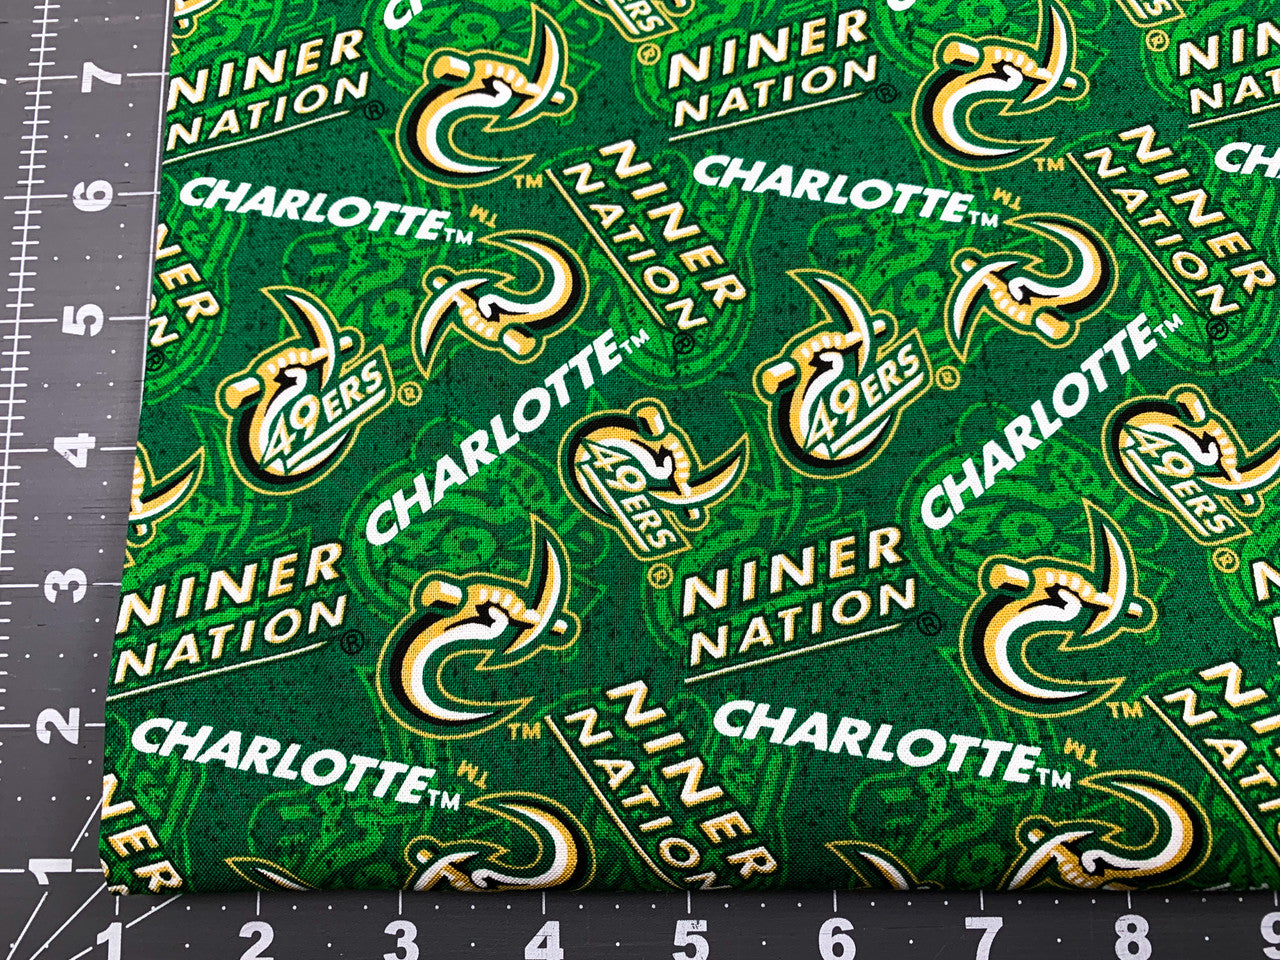 Charlotte 49ers fabric NCC1178 UNC Charlotte Niner Nation